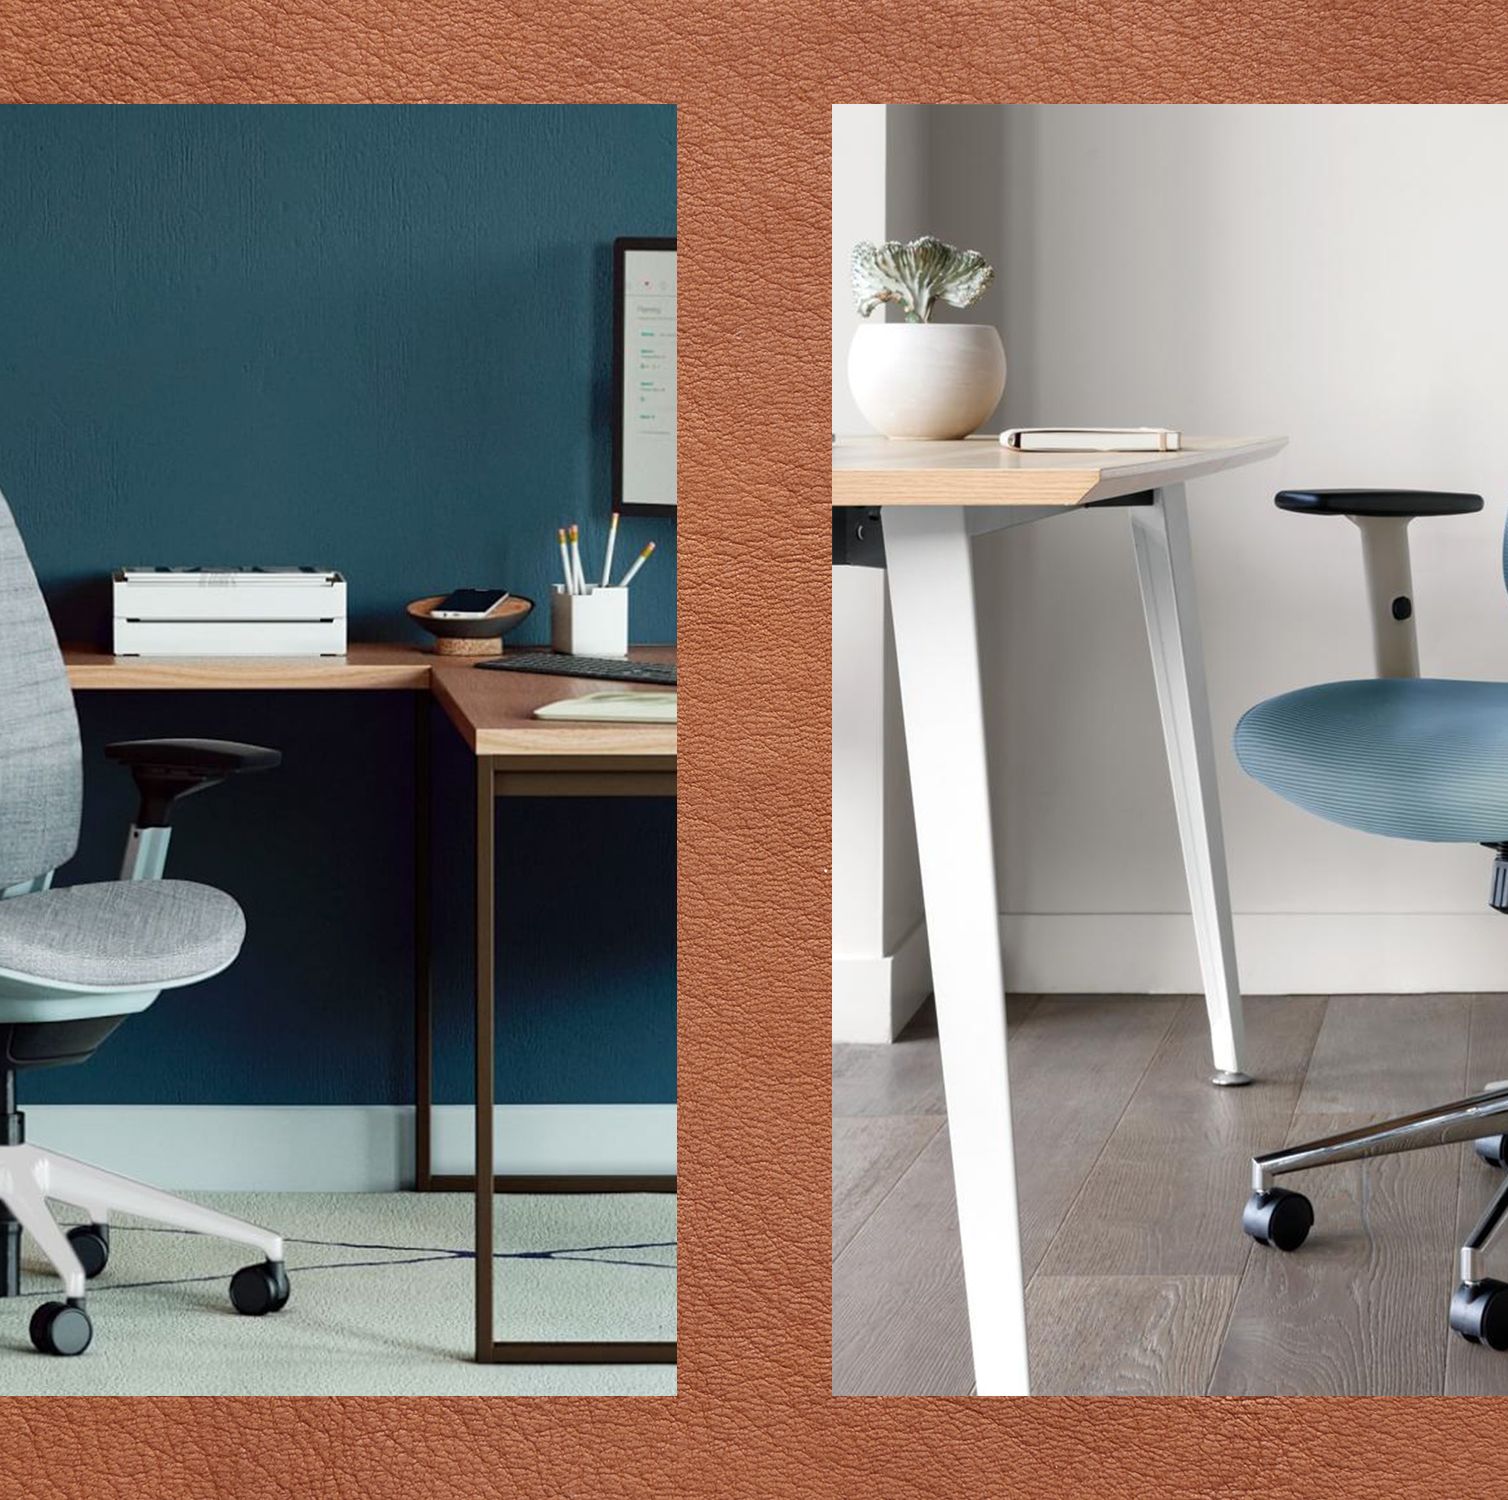 ergonomic office chairs